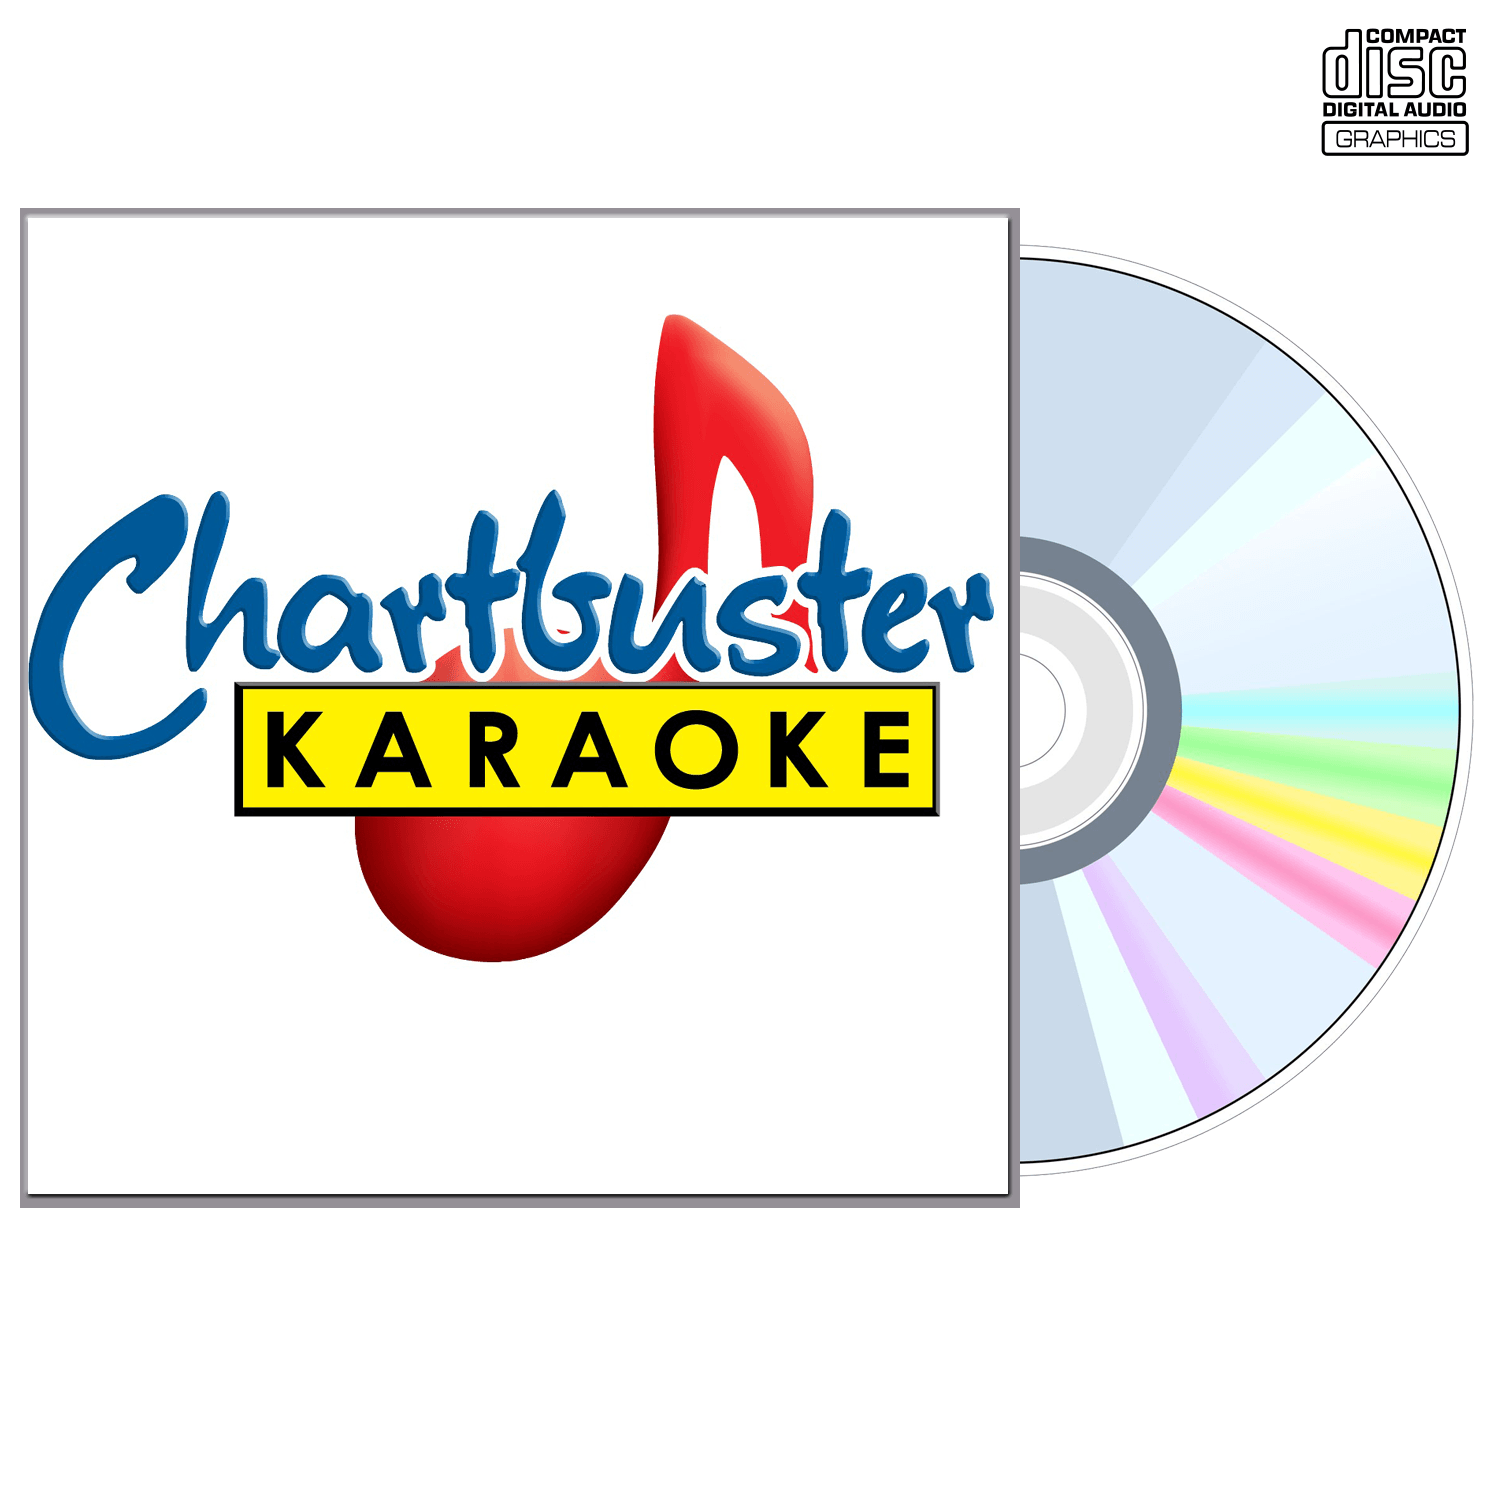 Jamie O’neal - CD+G - Chartbuster Karaoke - Karaoke Home Entertainment